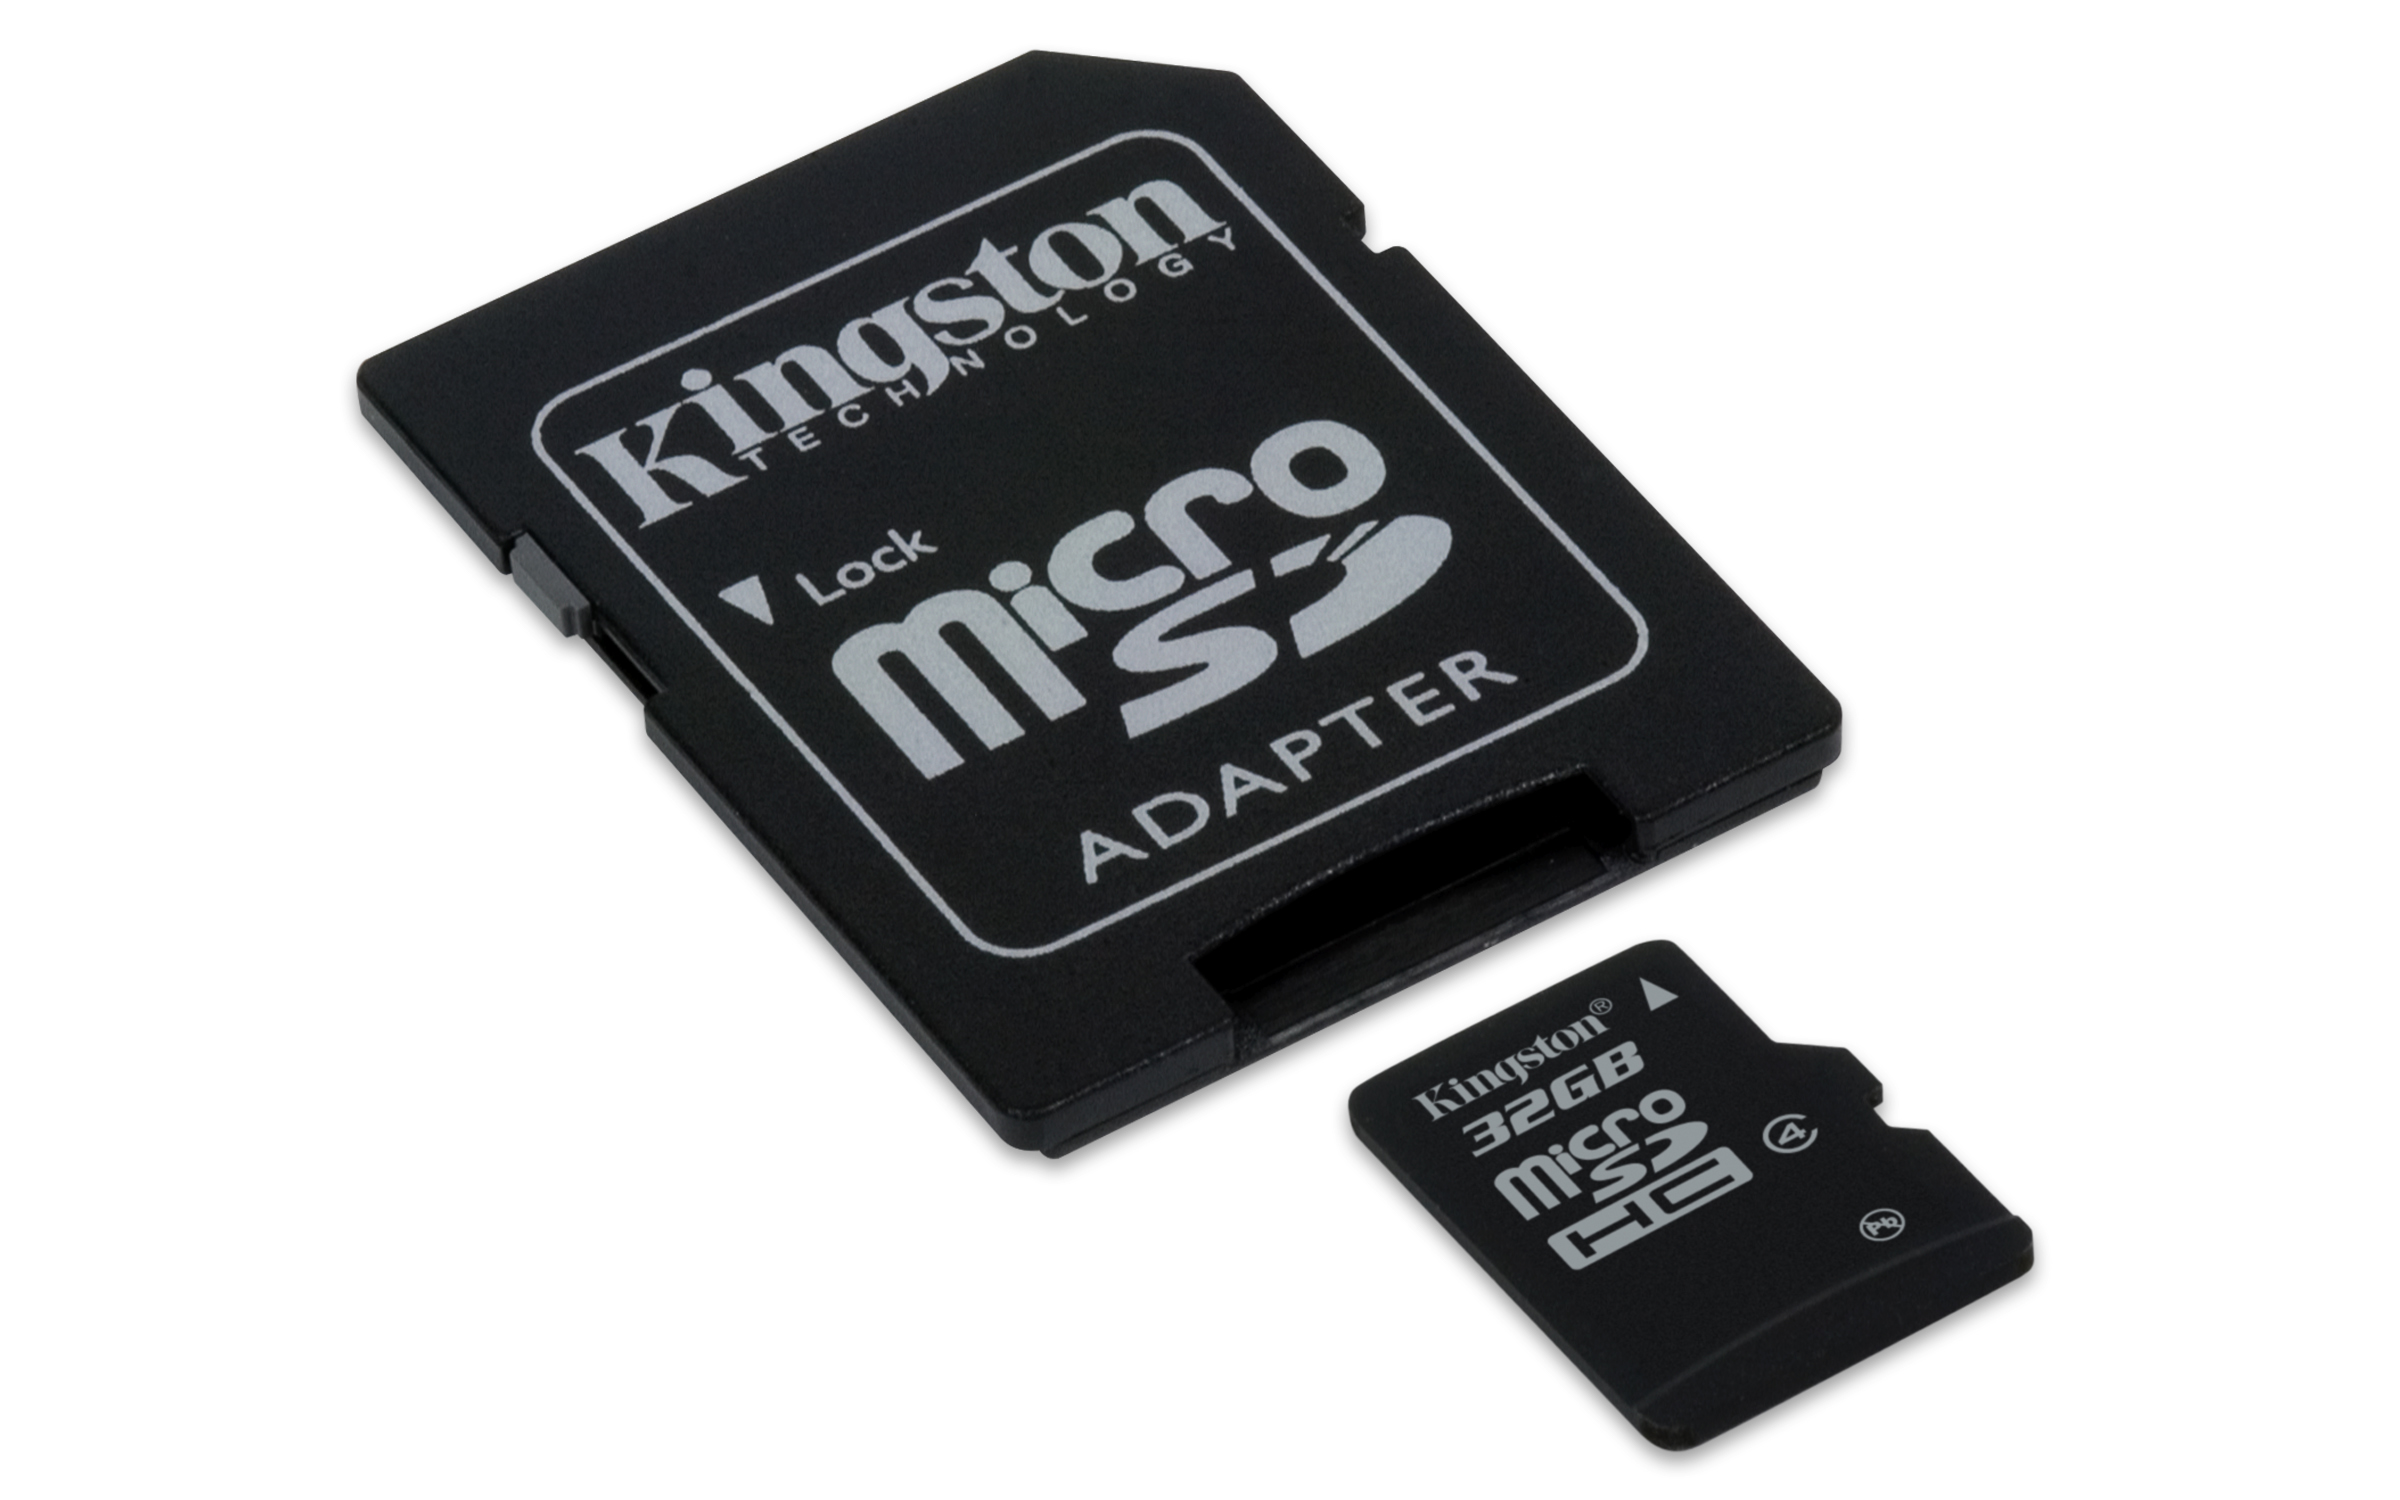 Кингстон микро. Kingston sdc10. Kingston Micro SDHC / TF карт памяти 4 GB class 4. Карта памяти 32 ГБ MICROSDHC Kingston. Картридер Kingston для микро SD.